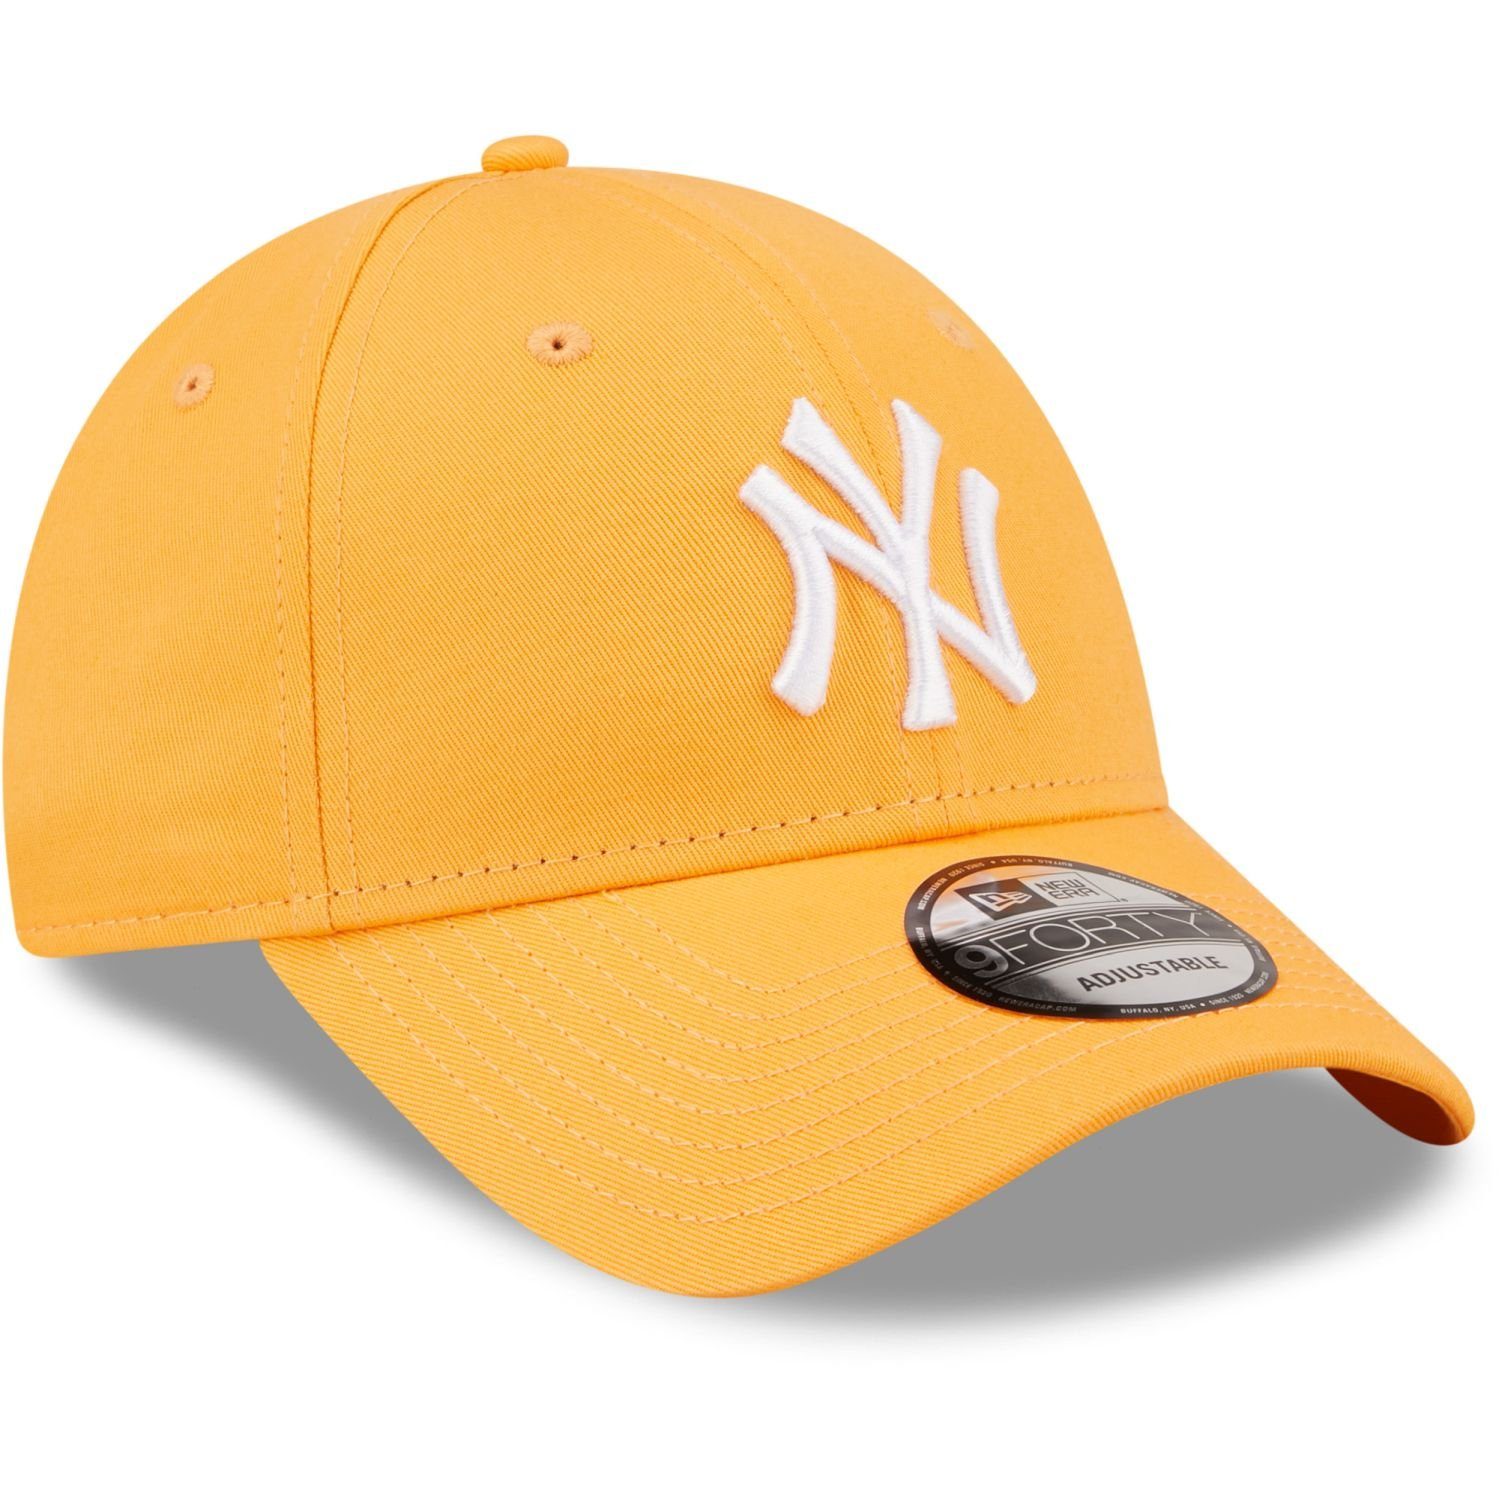 New Cap Yankees 9Forty gold New York Era Strapback Baseball